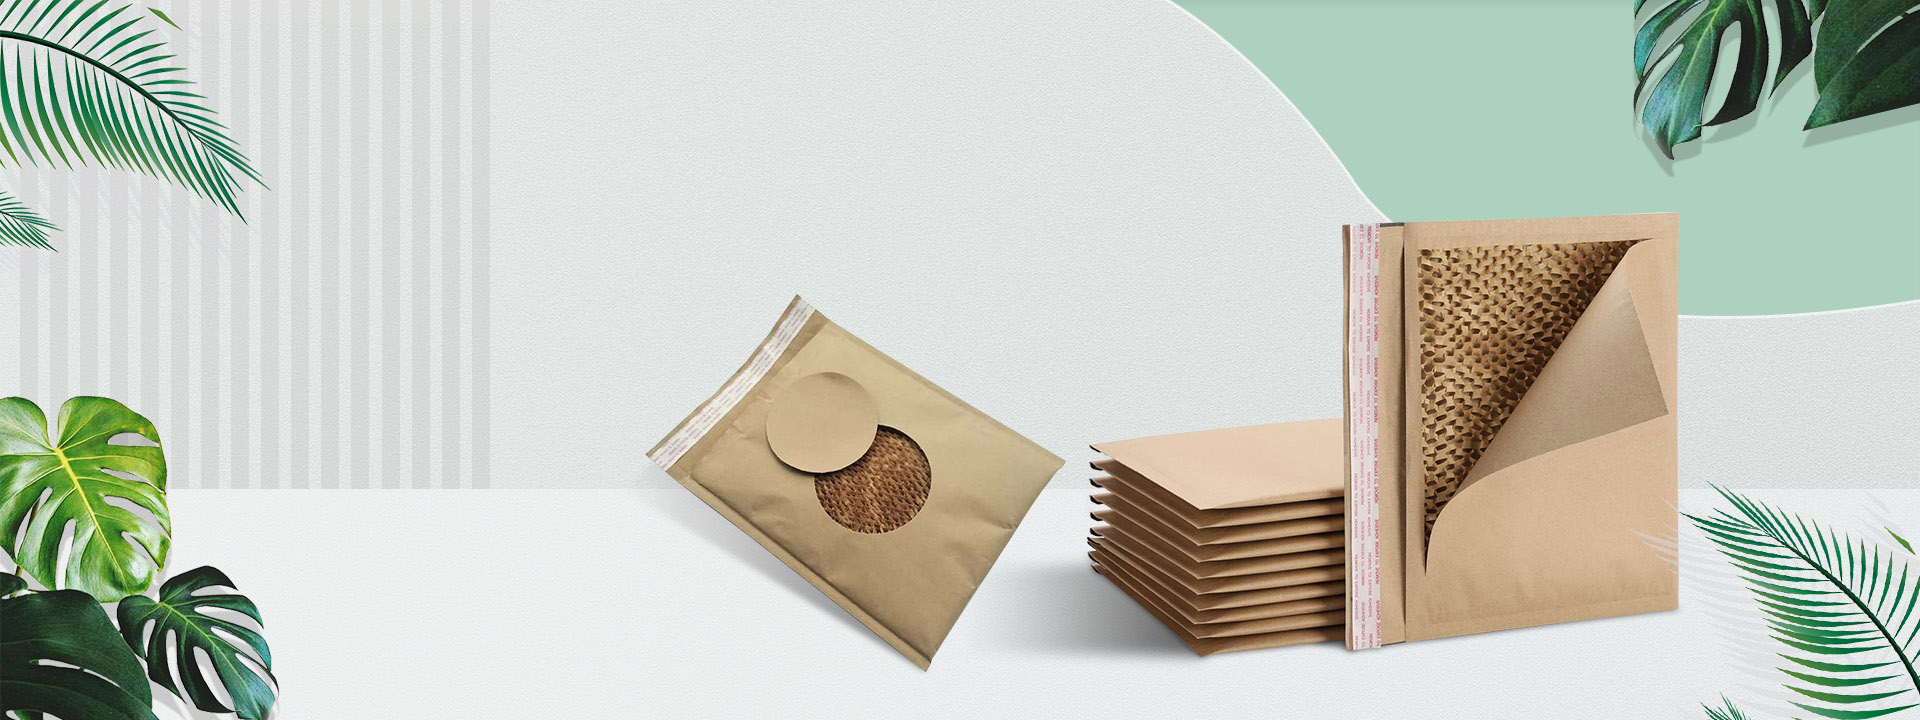 degradable Eco Paper Box heart shaped